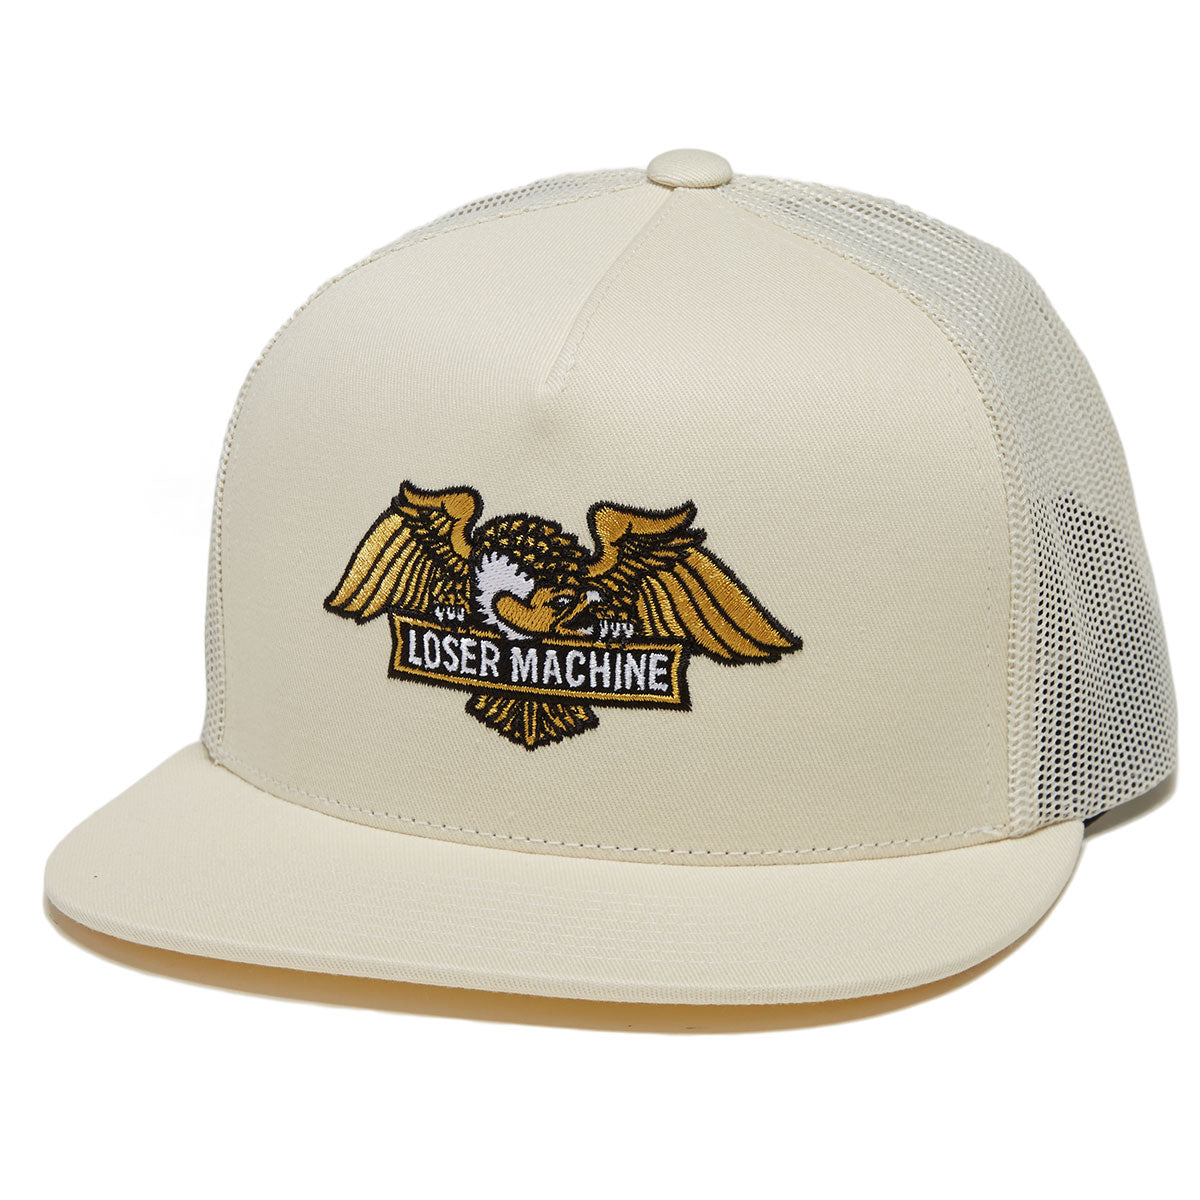 Loser Machine Wings Trucker Hat - Off White image 1